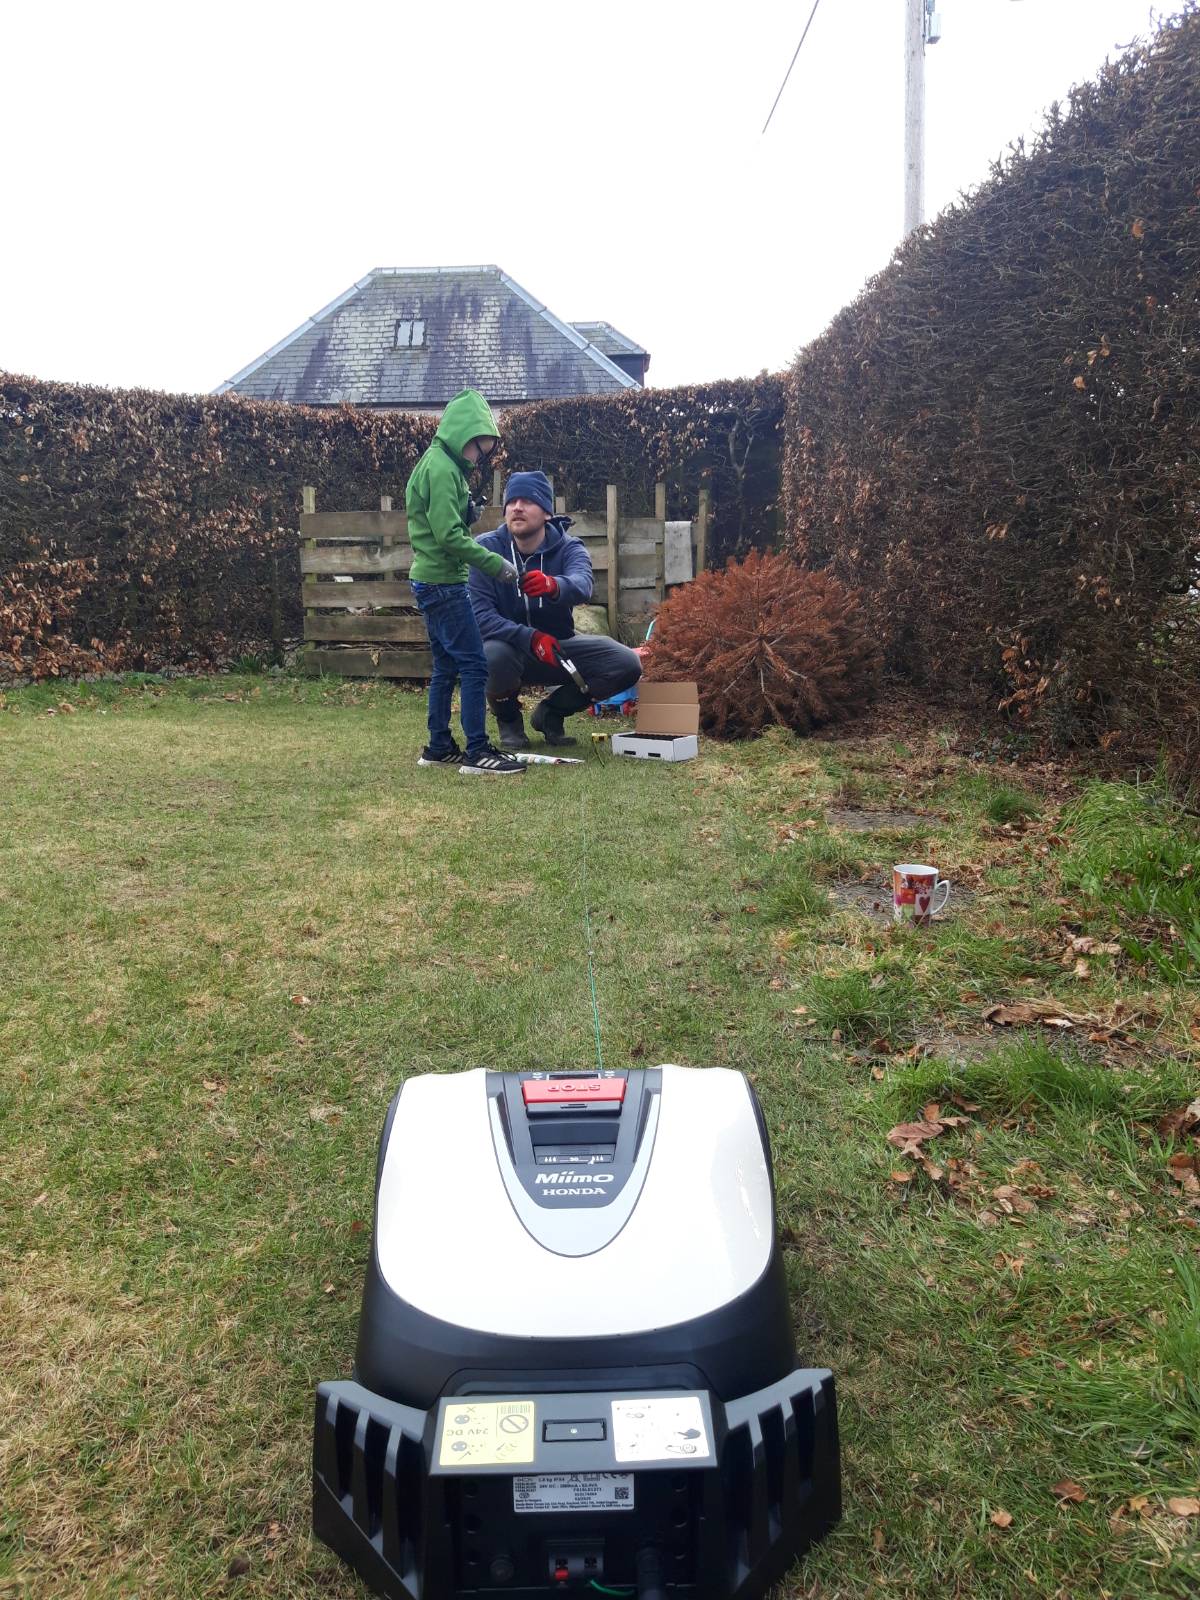 miimo robotic lawn mower reivew awesome